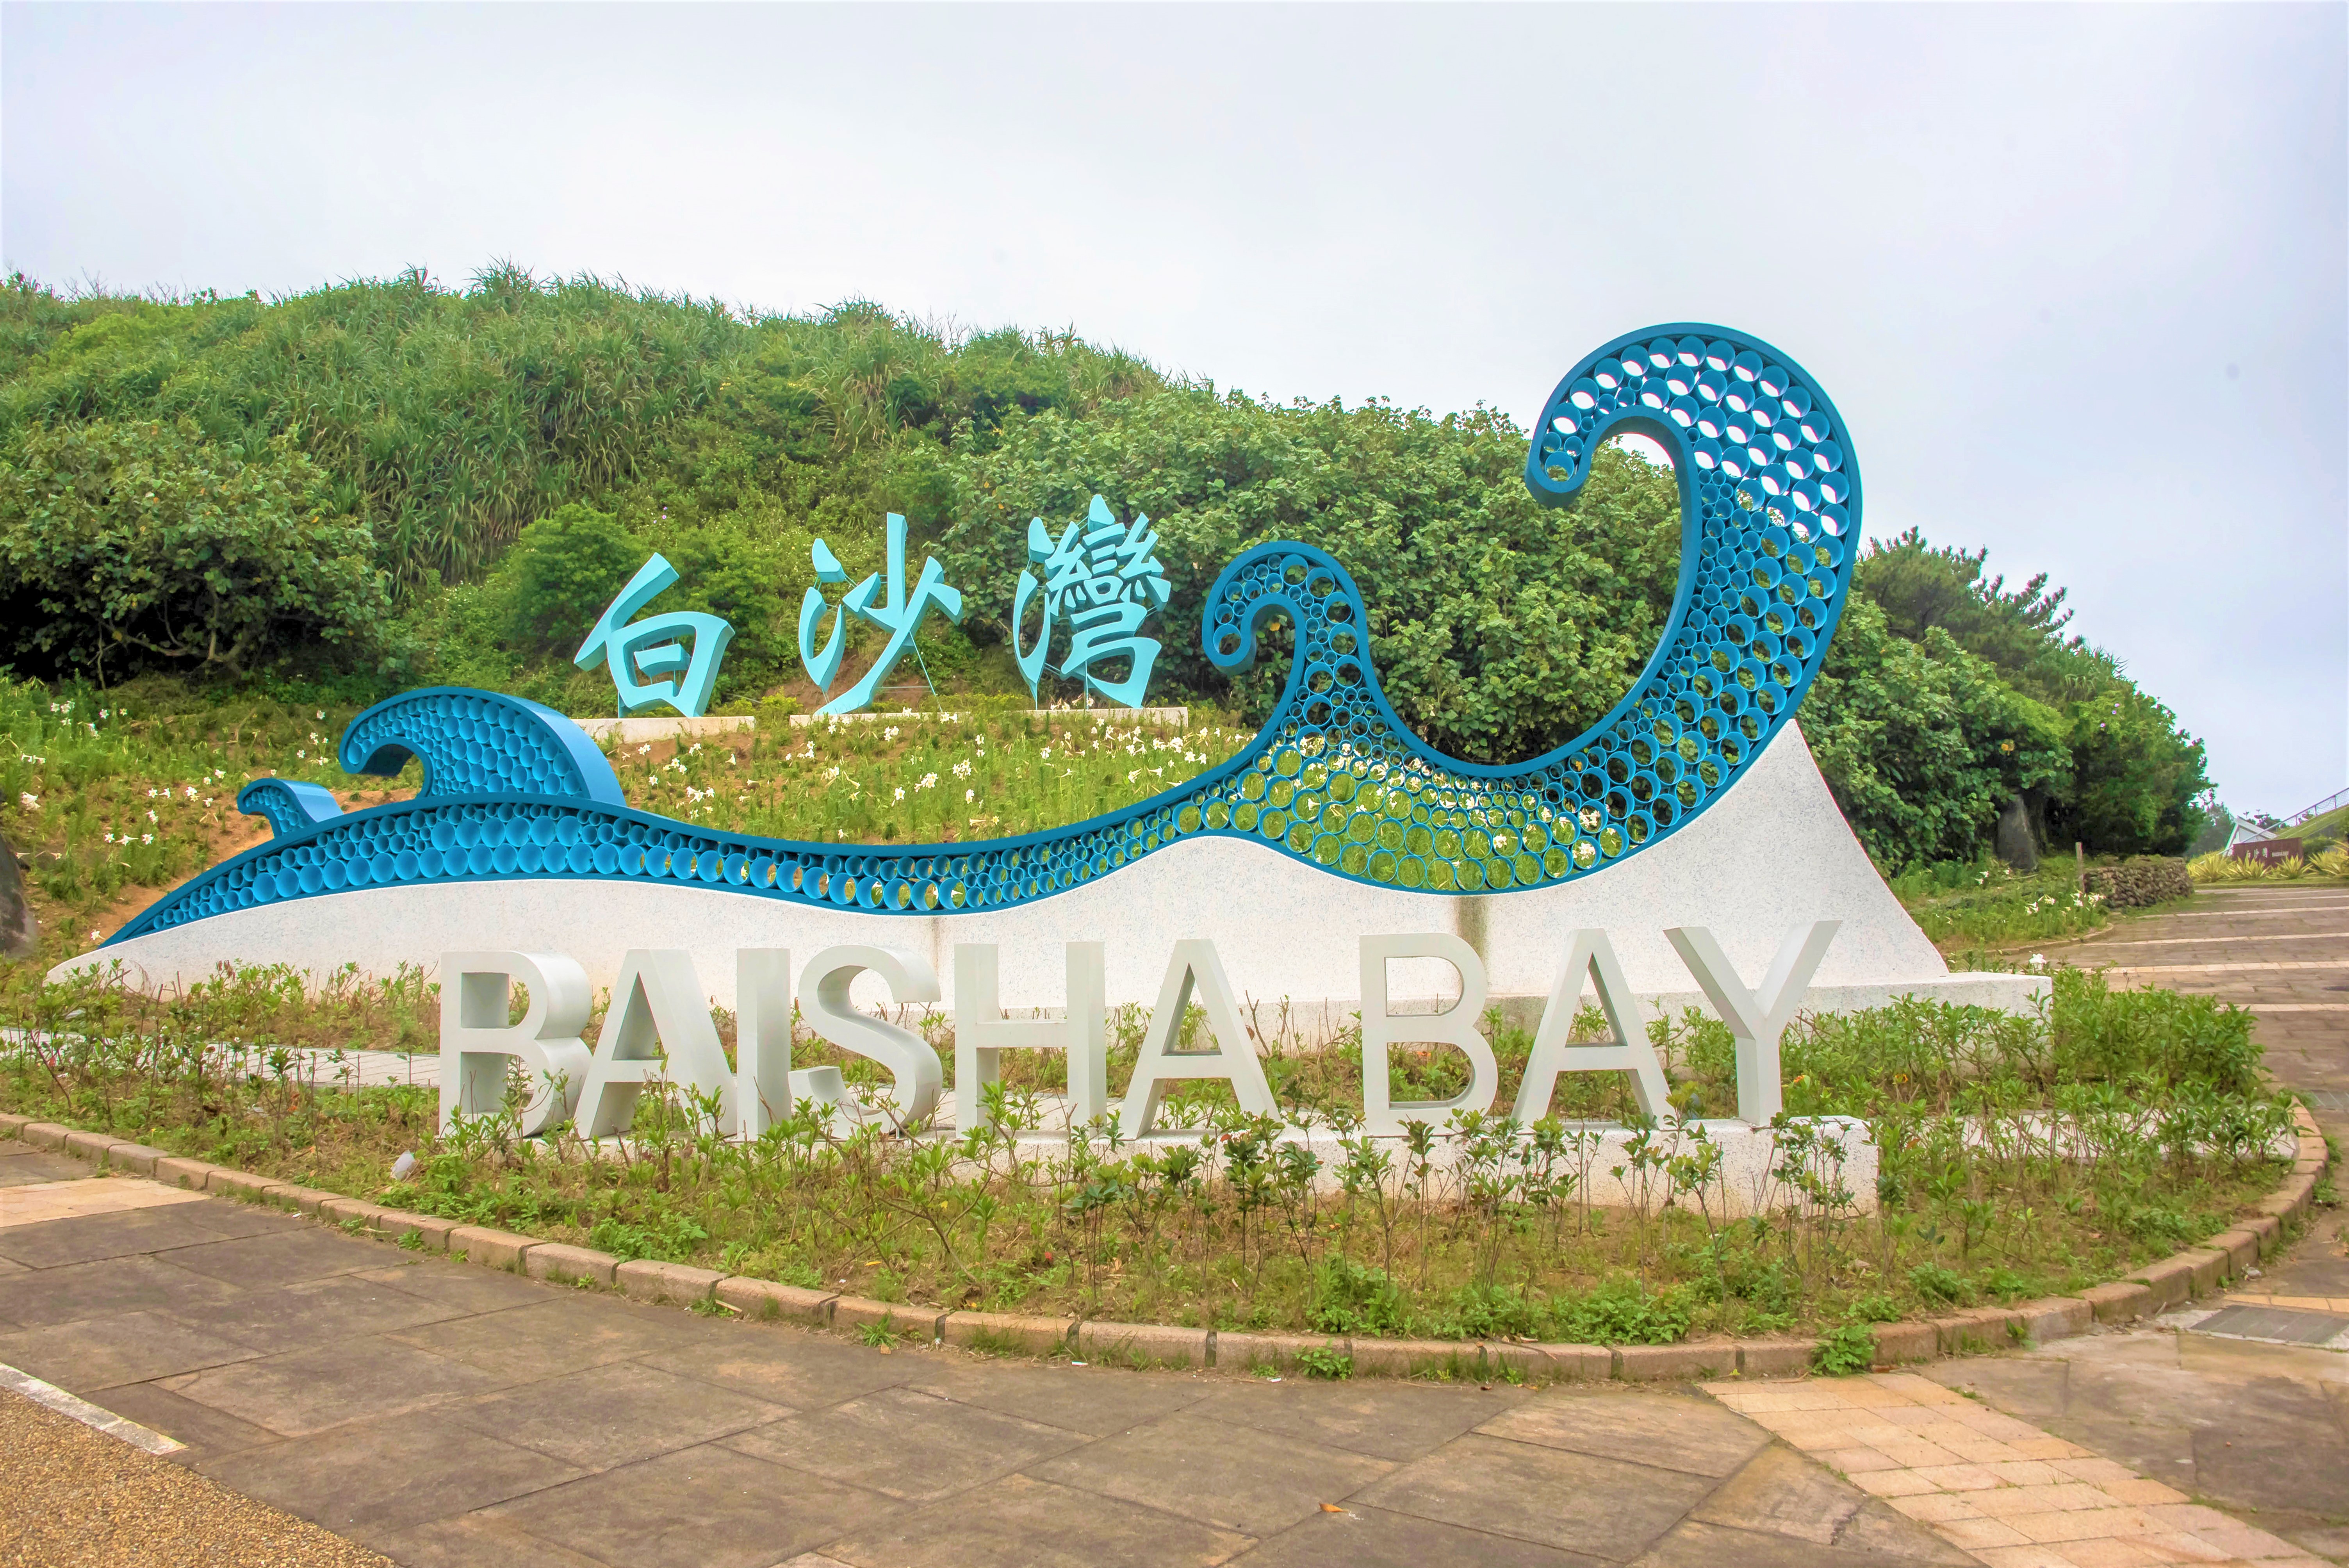 Baisha Bay Recreation Area(slide banner)